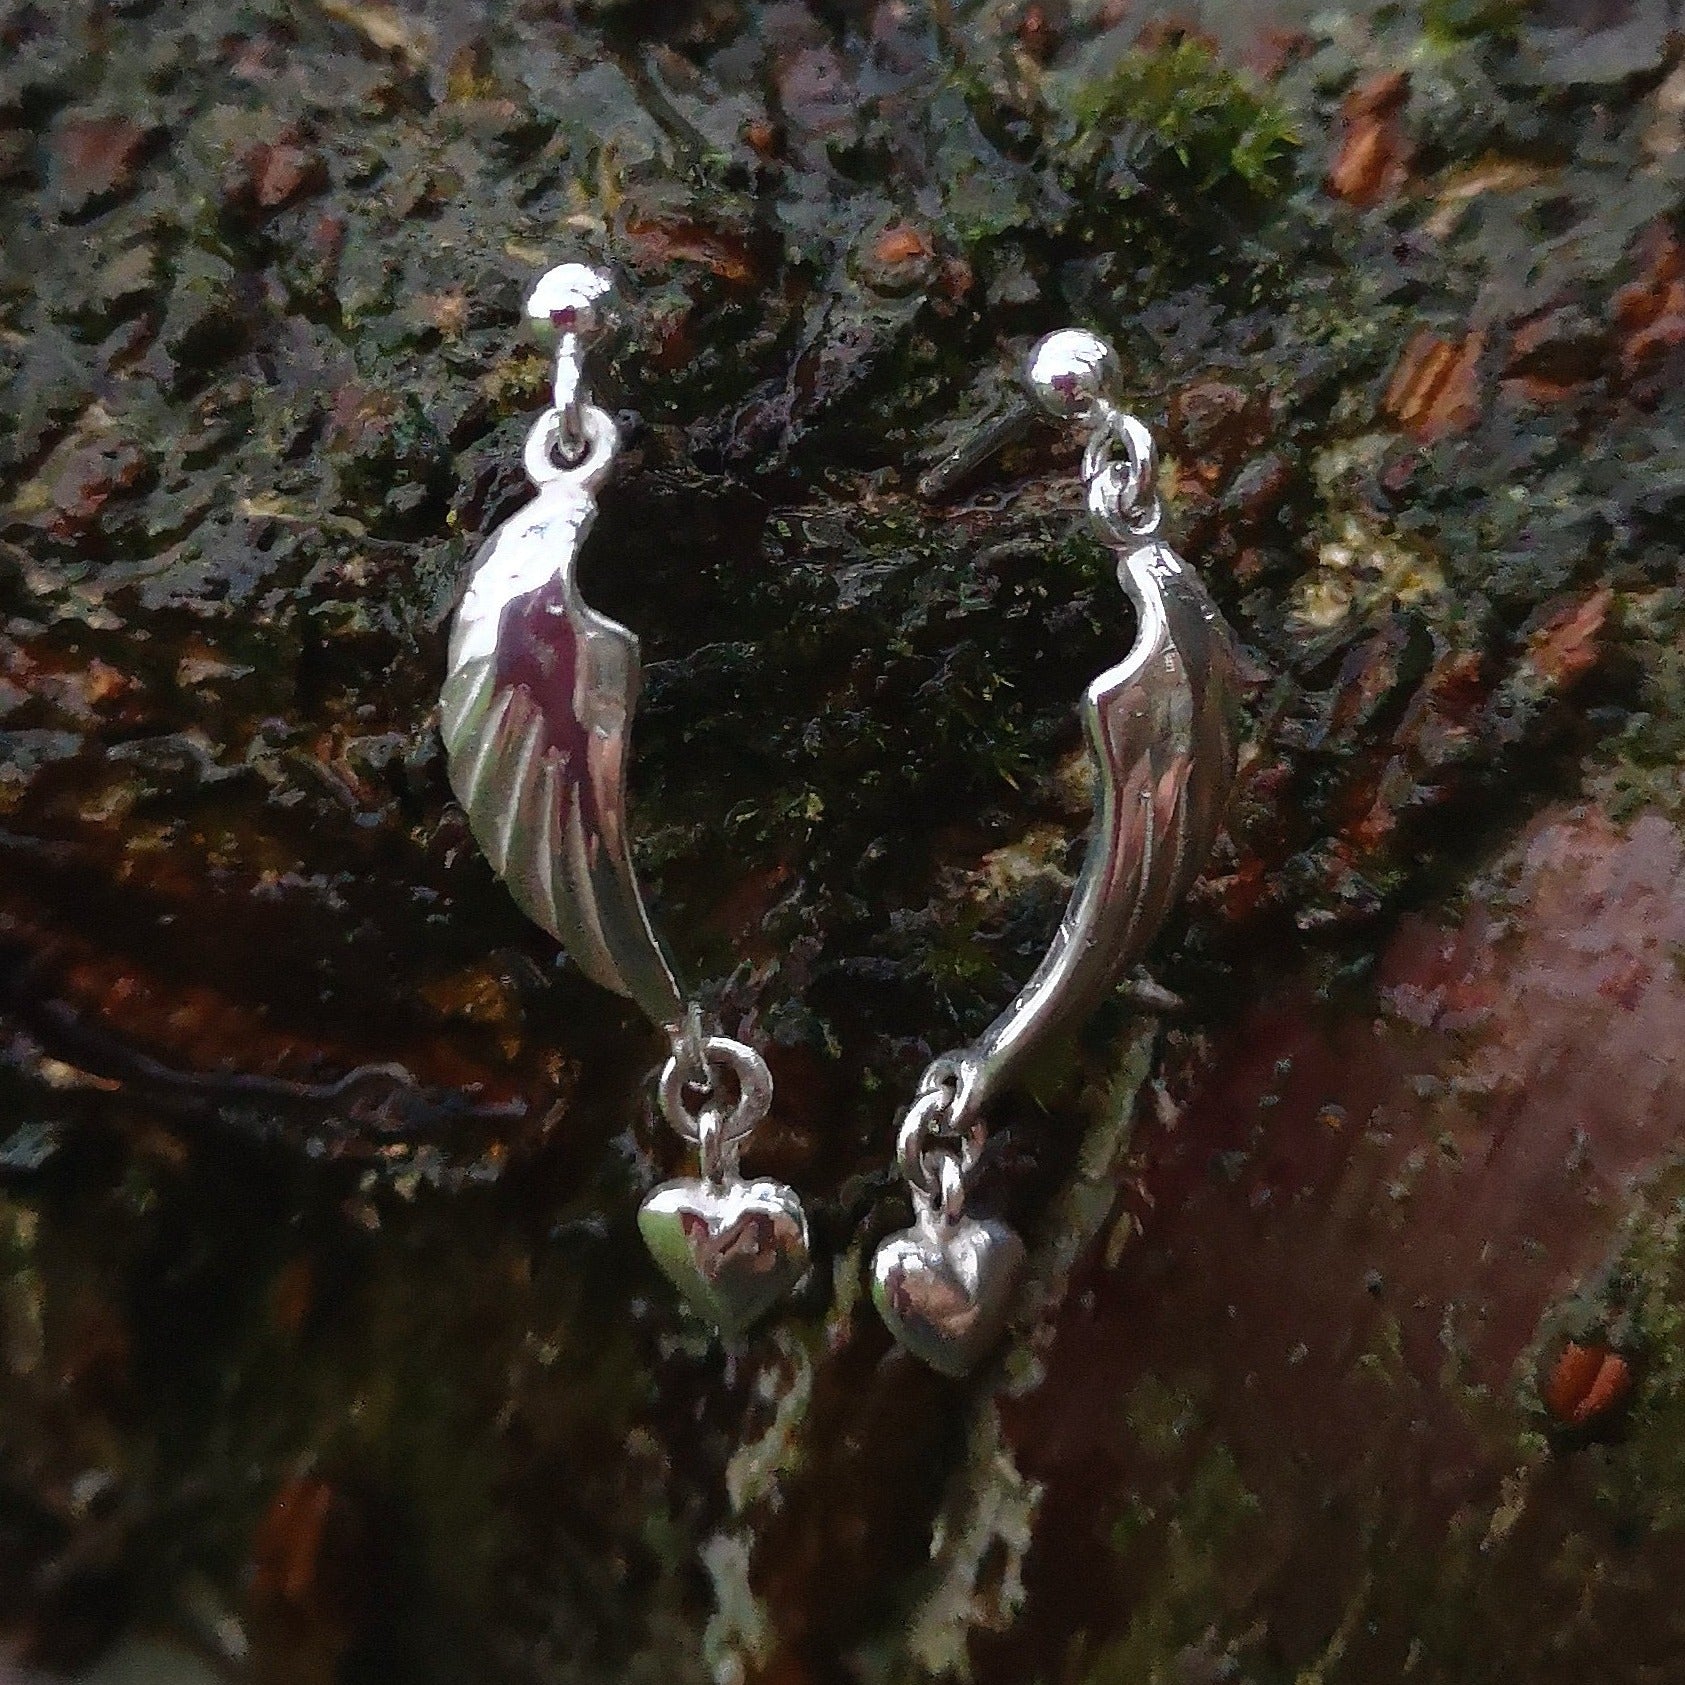 Angel Hug Earrings handmade from Sterling Silver by Irish Jewellery Designer Elena Brennan